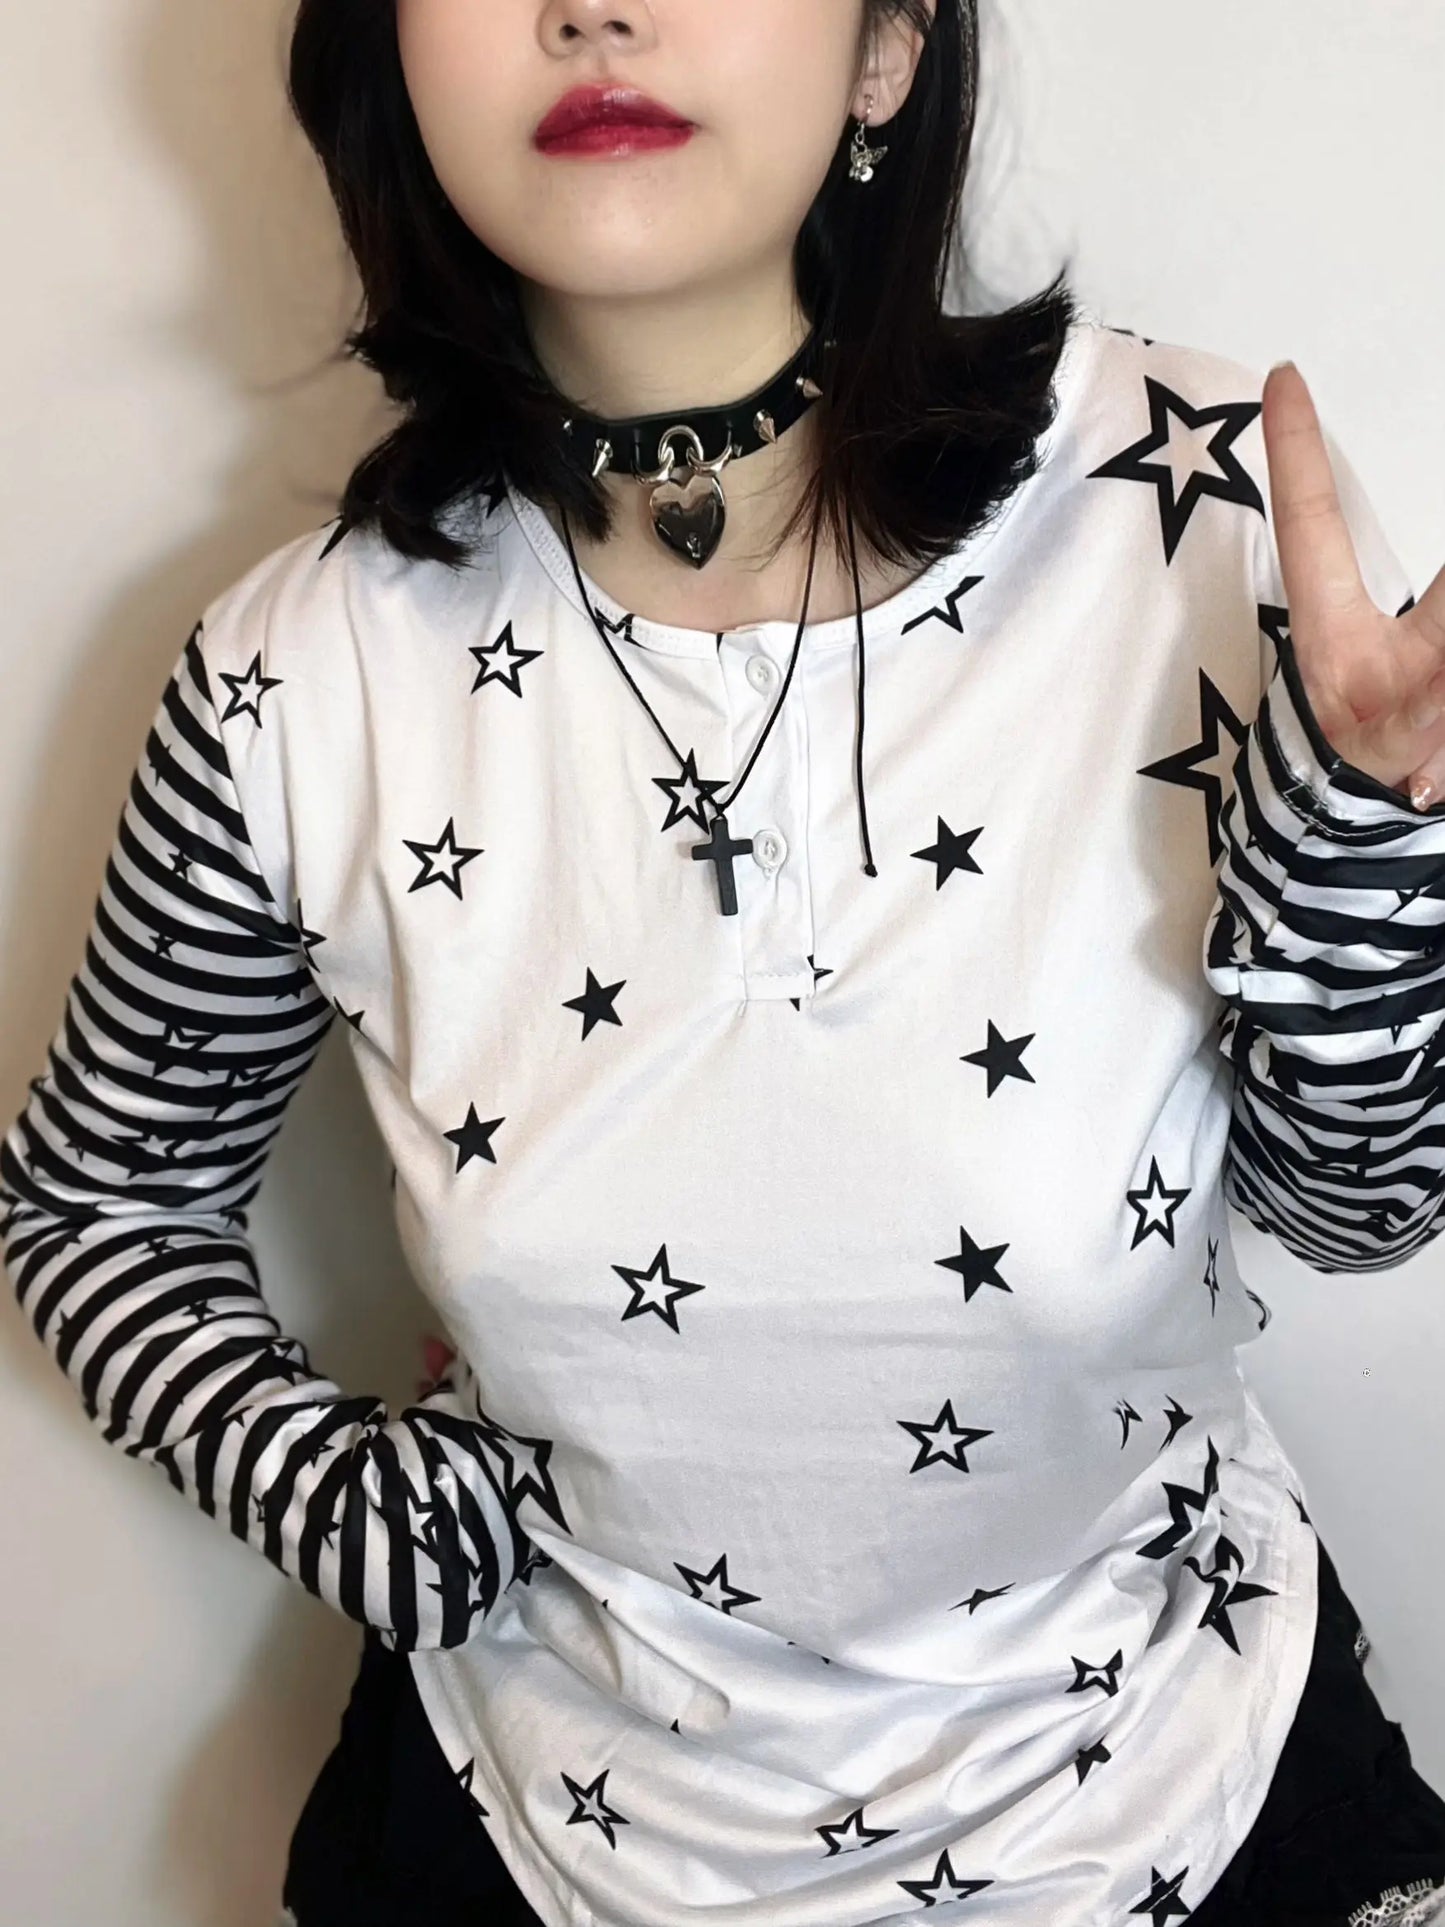 'Retro Star' Anime Girls EMO Star Top AlielNosirrah